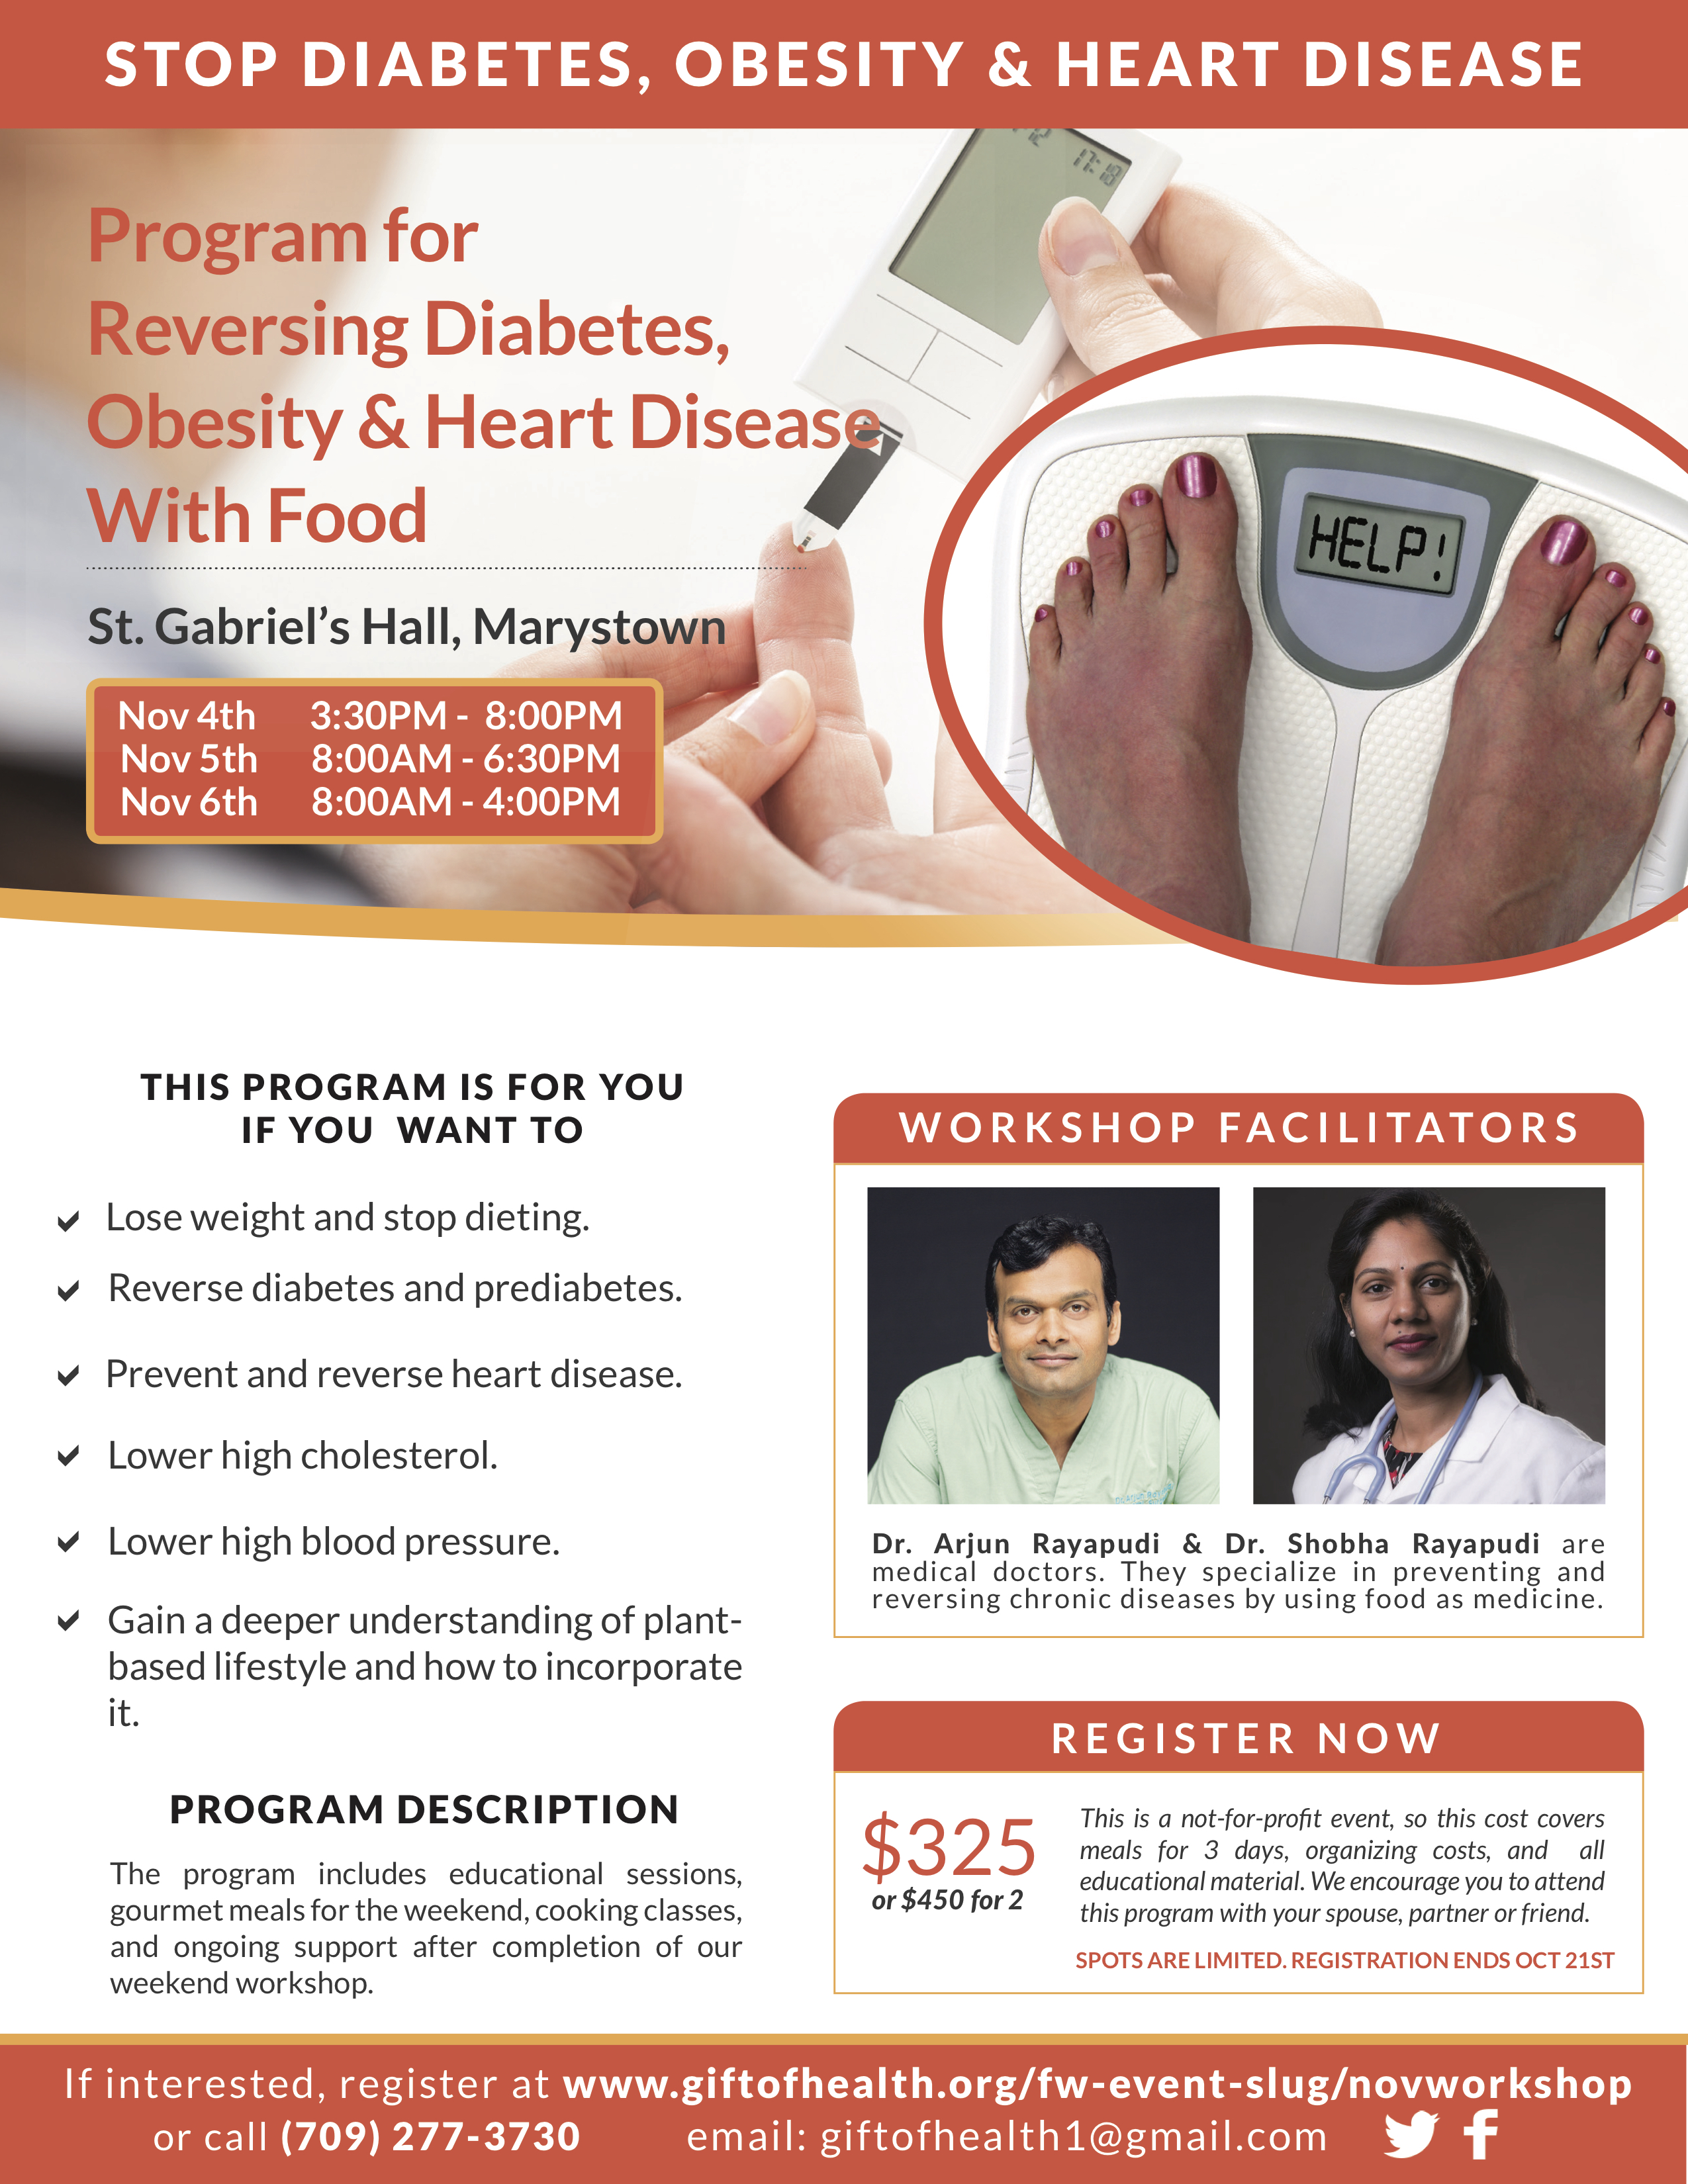 Program for Reversing Diabetes, Obesity & Heart Disease with Food